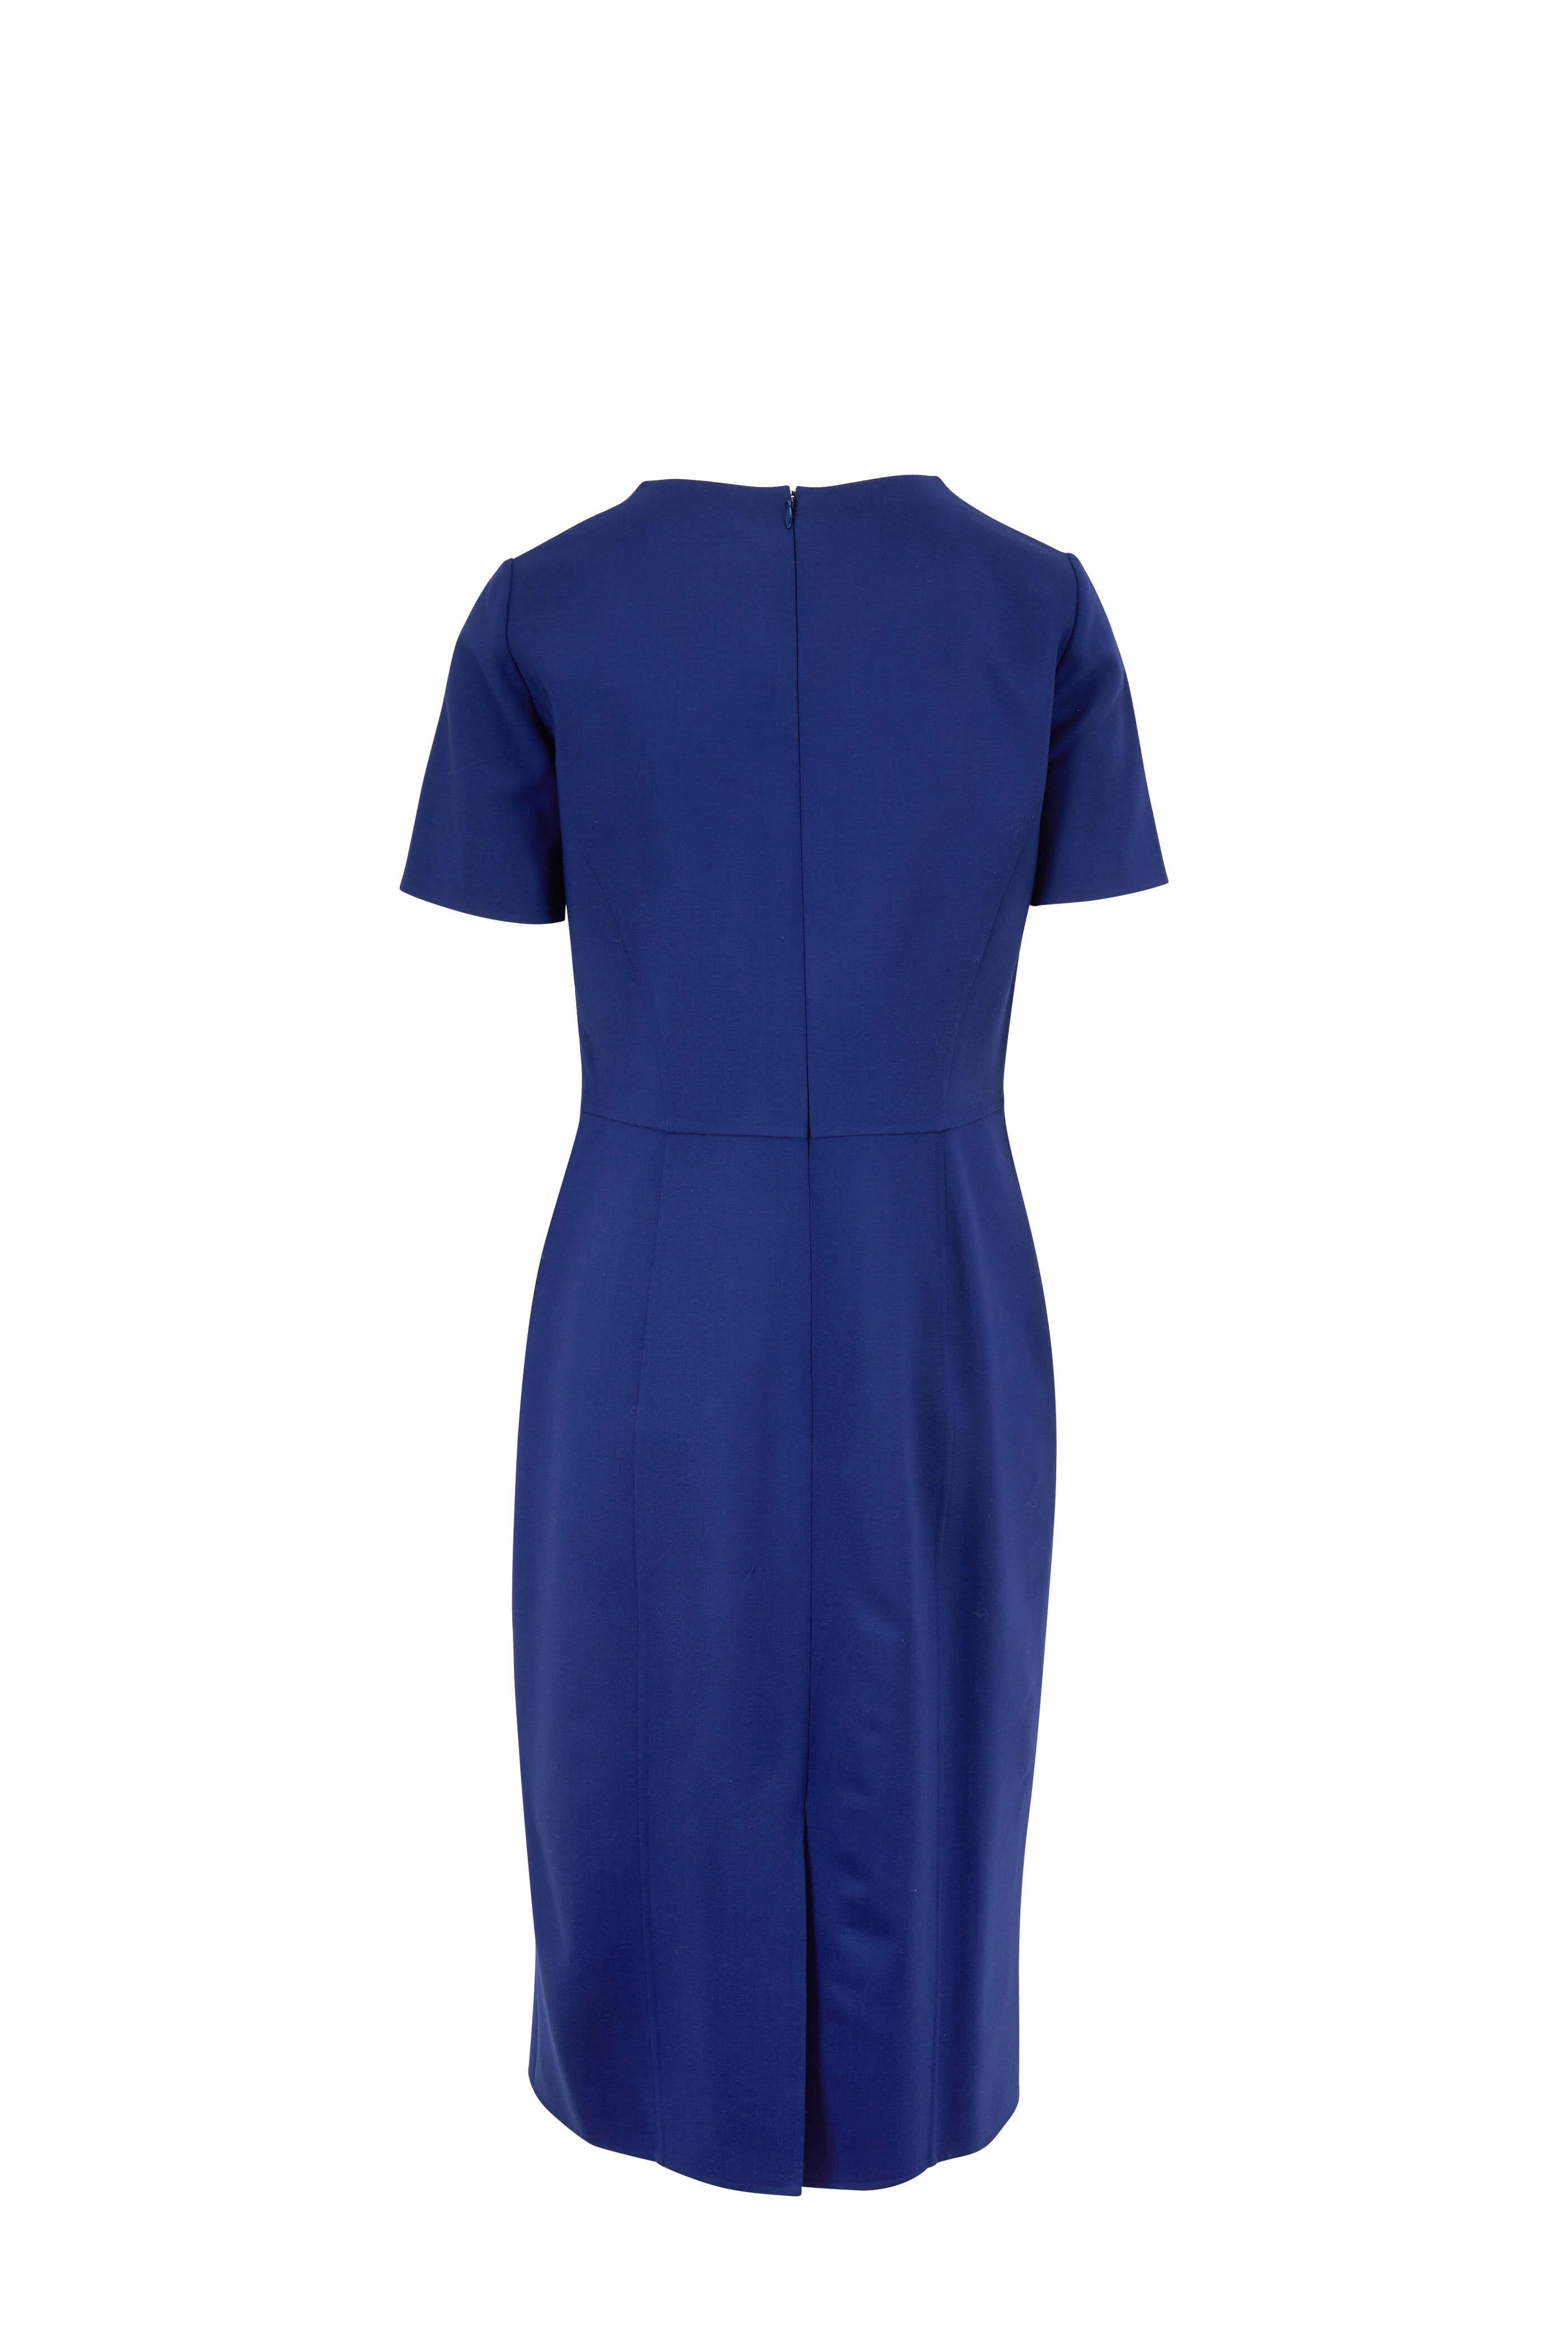 Carolina Herrera - Sapphire Short Sleeve Sheath Dress